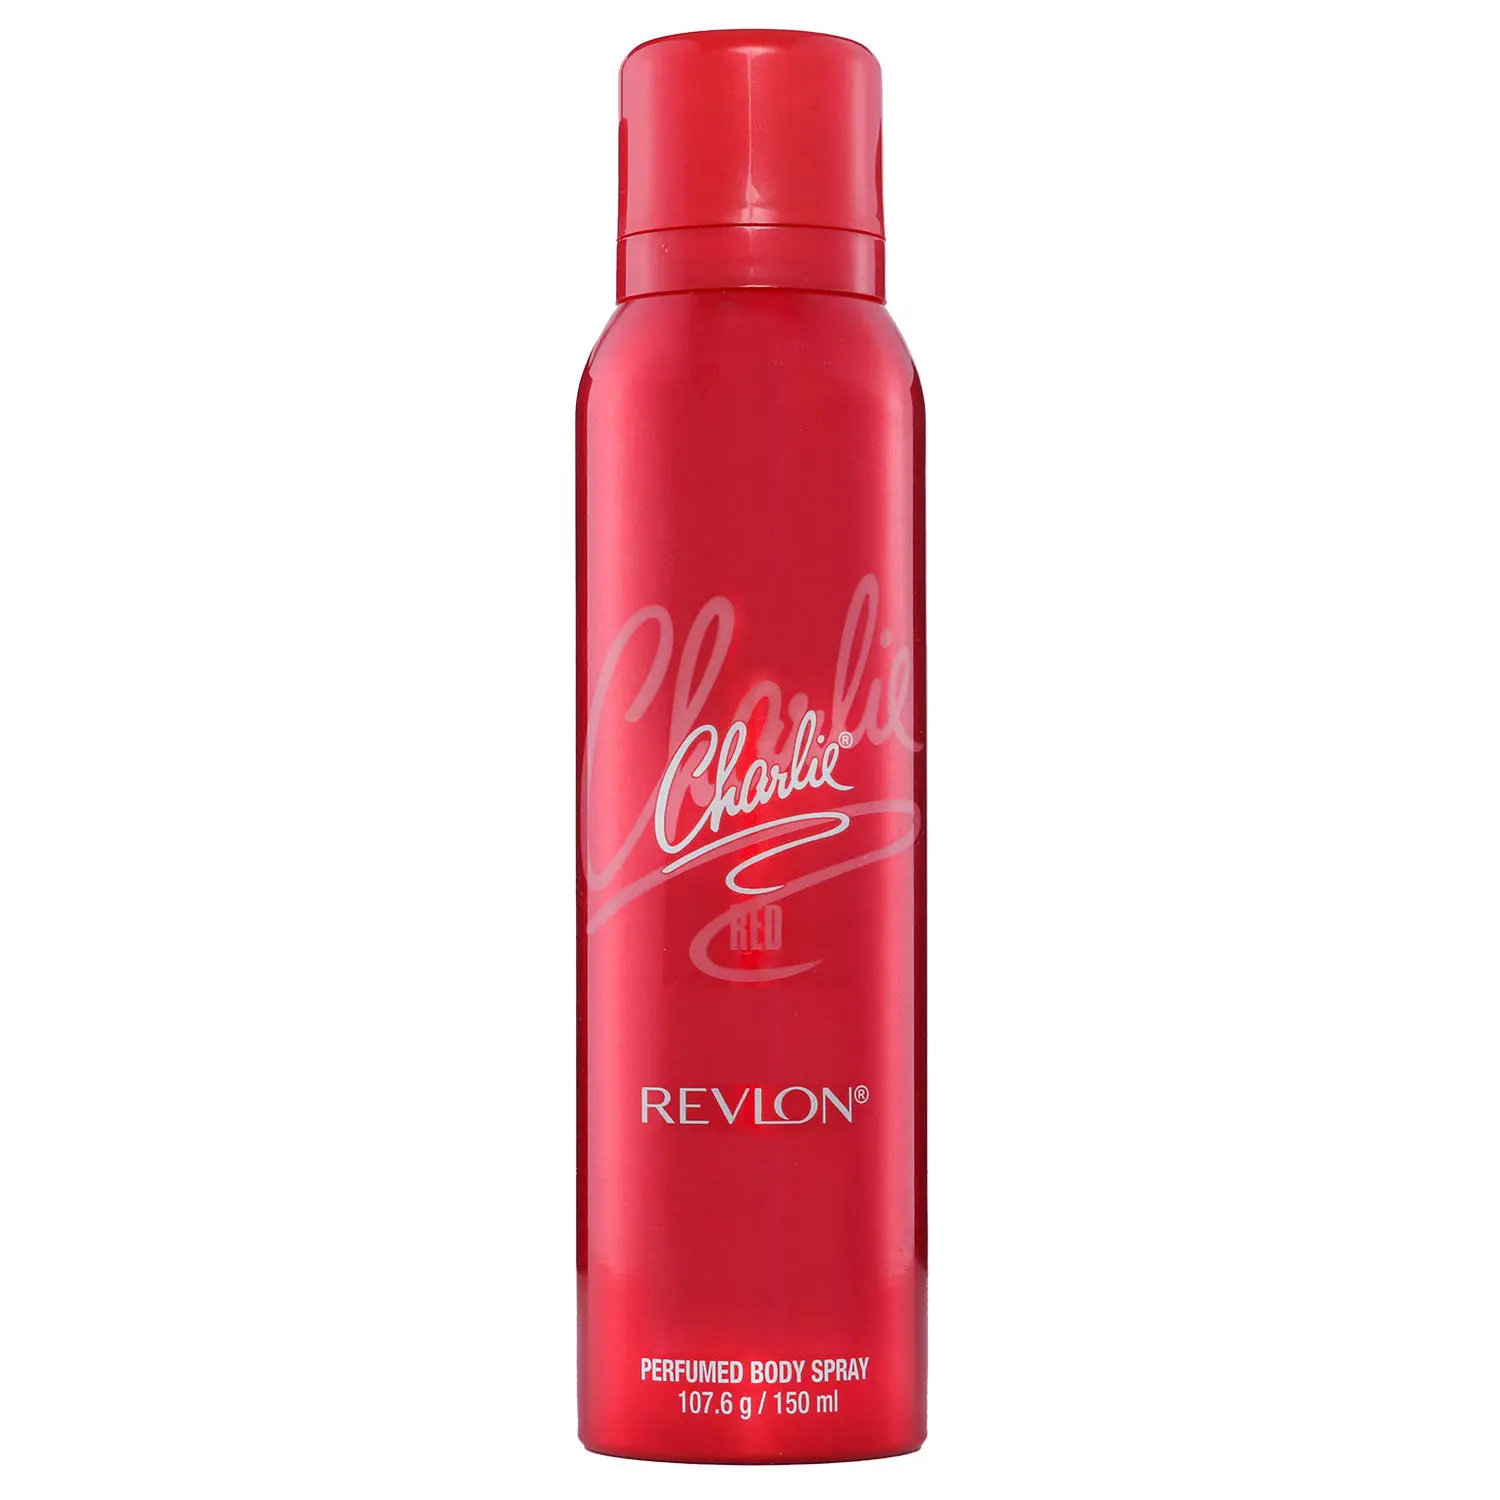 Revlon Charlie Perfumed Body Spray - Red